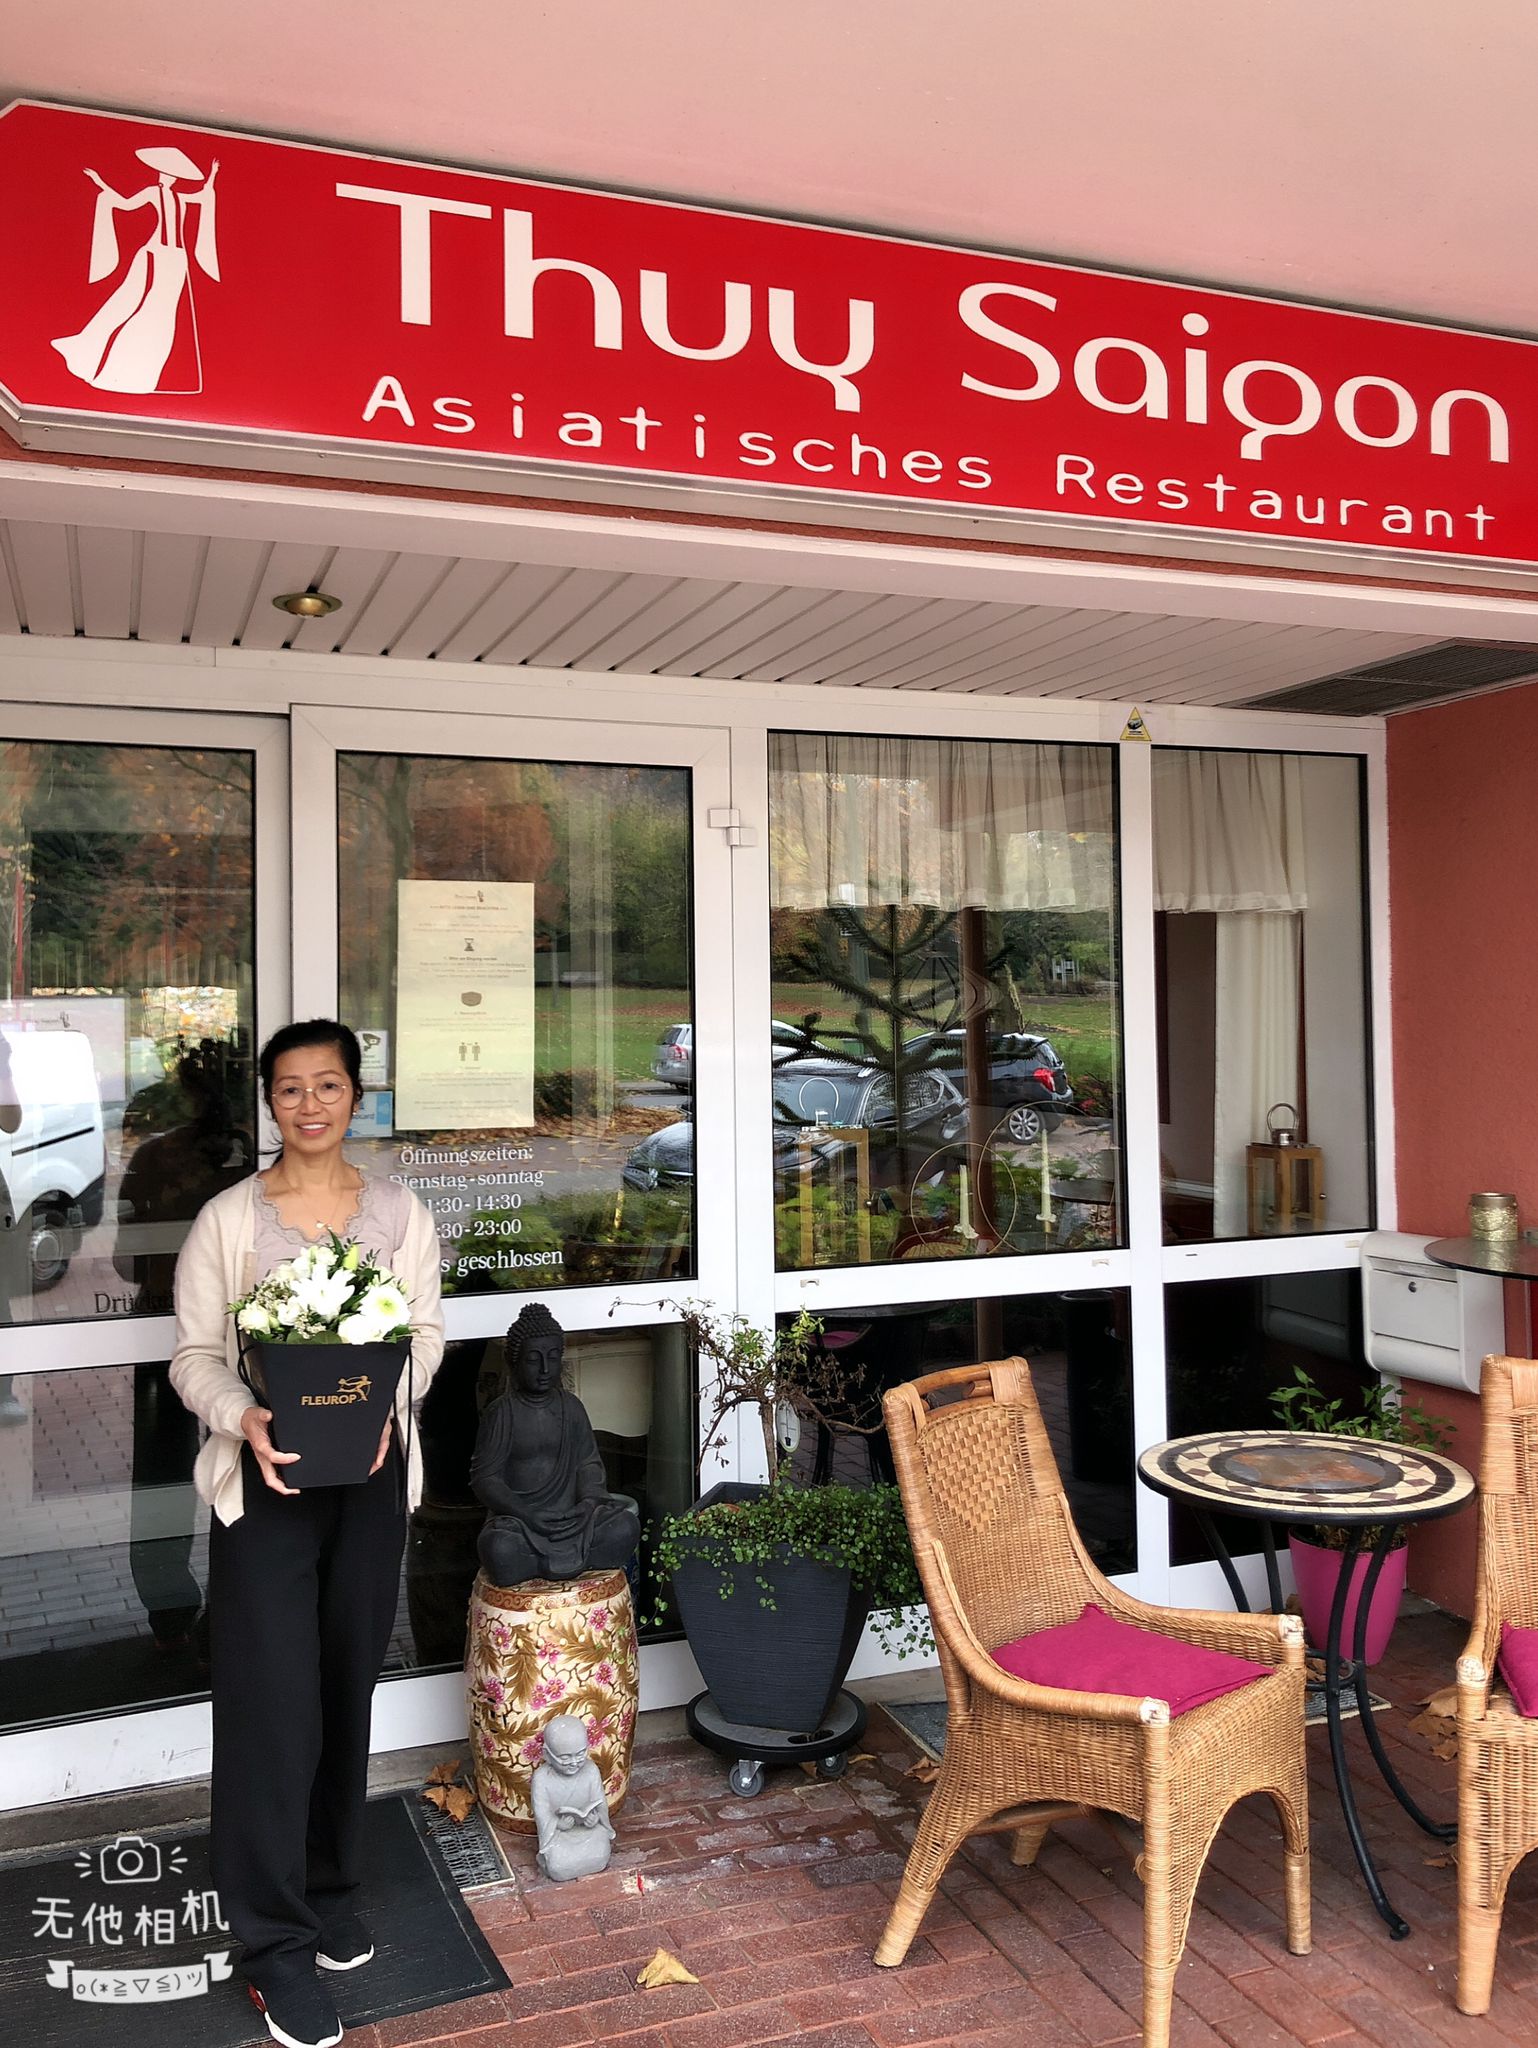 Inhaberin Resaurant Thuy Saigon